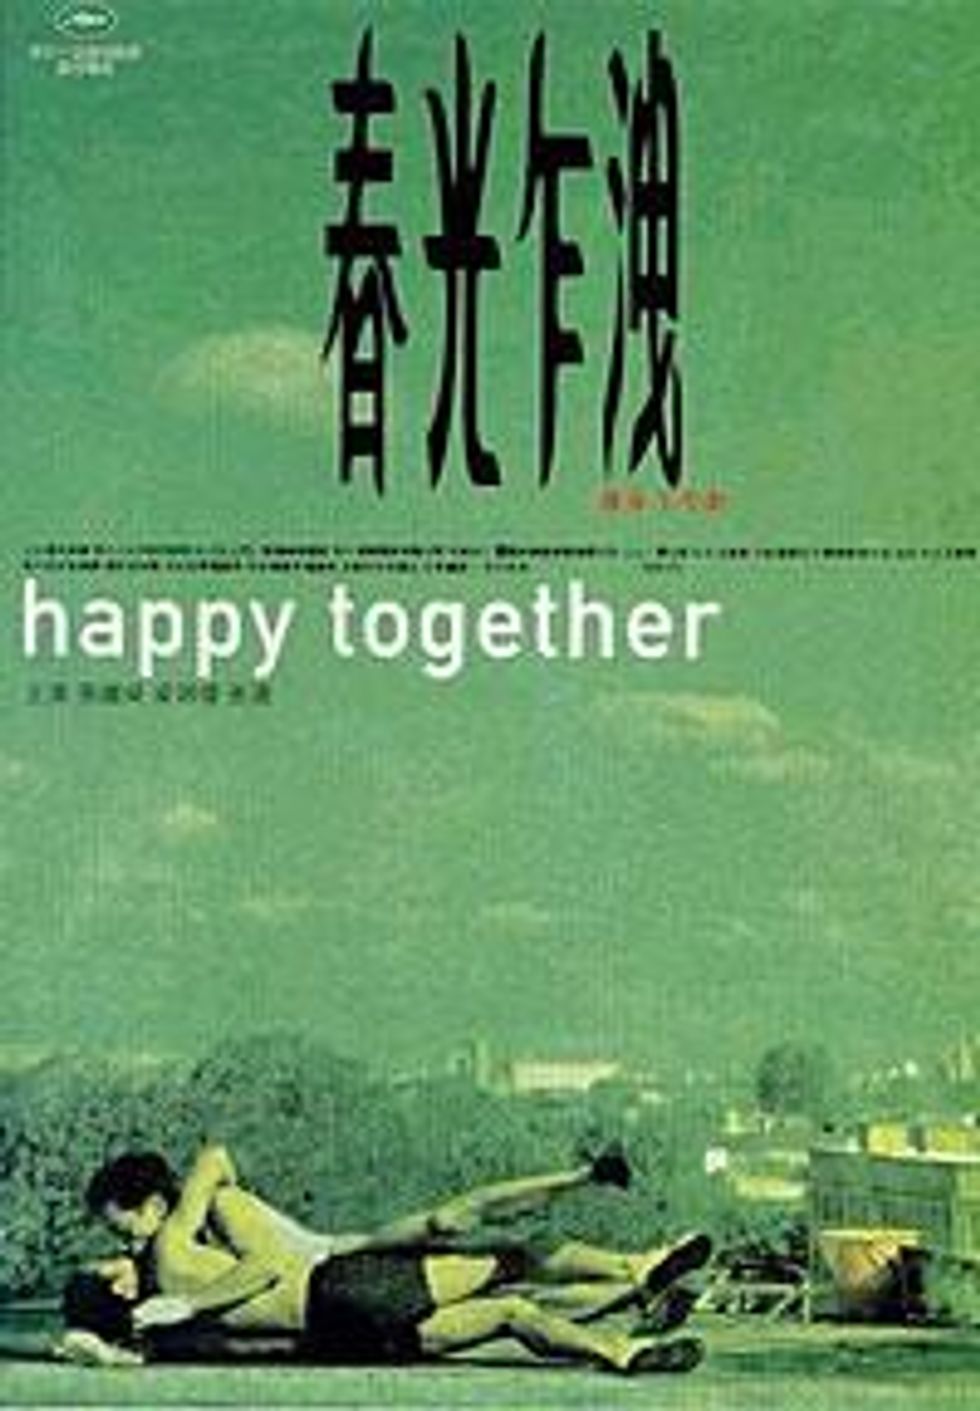 Happy_togetherx200_0